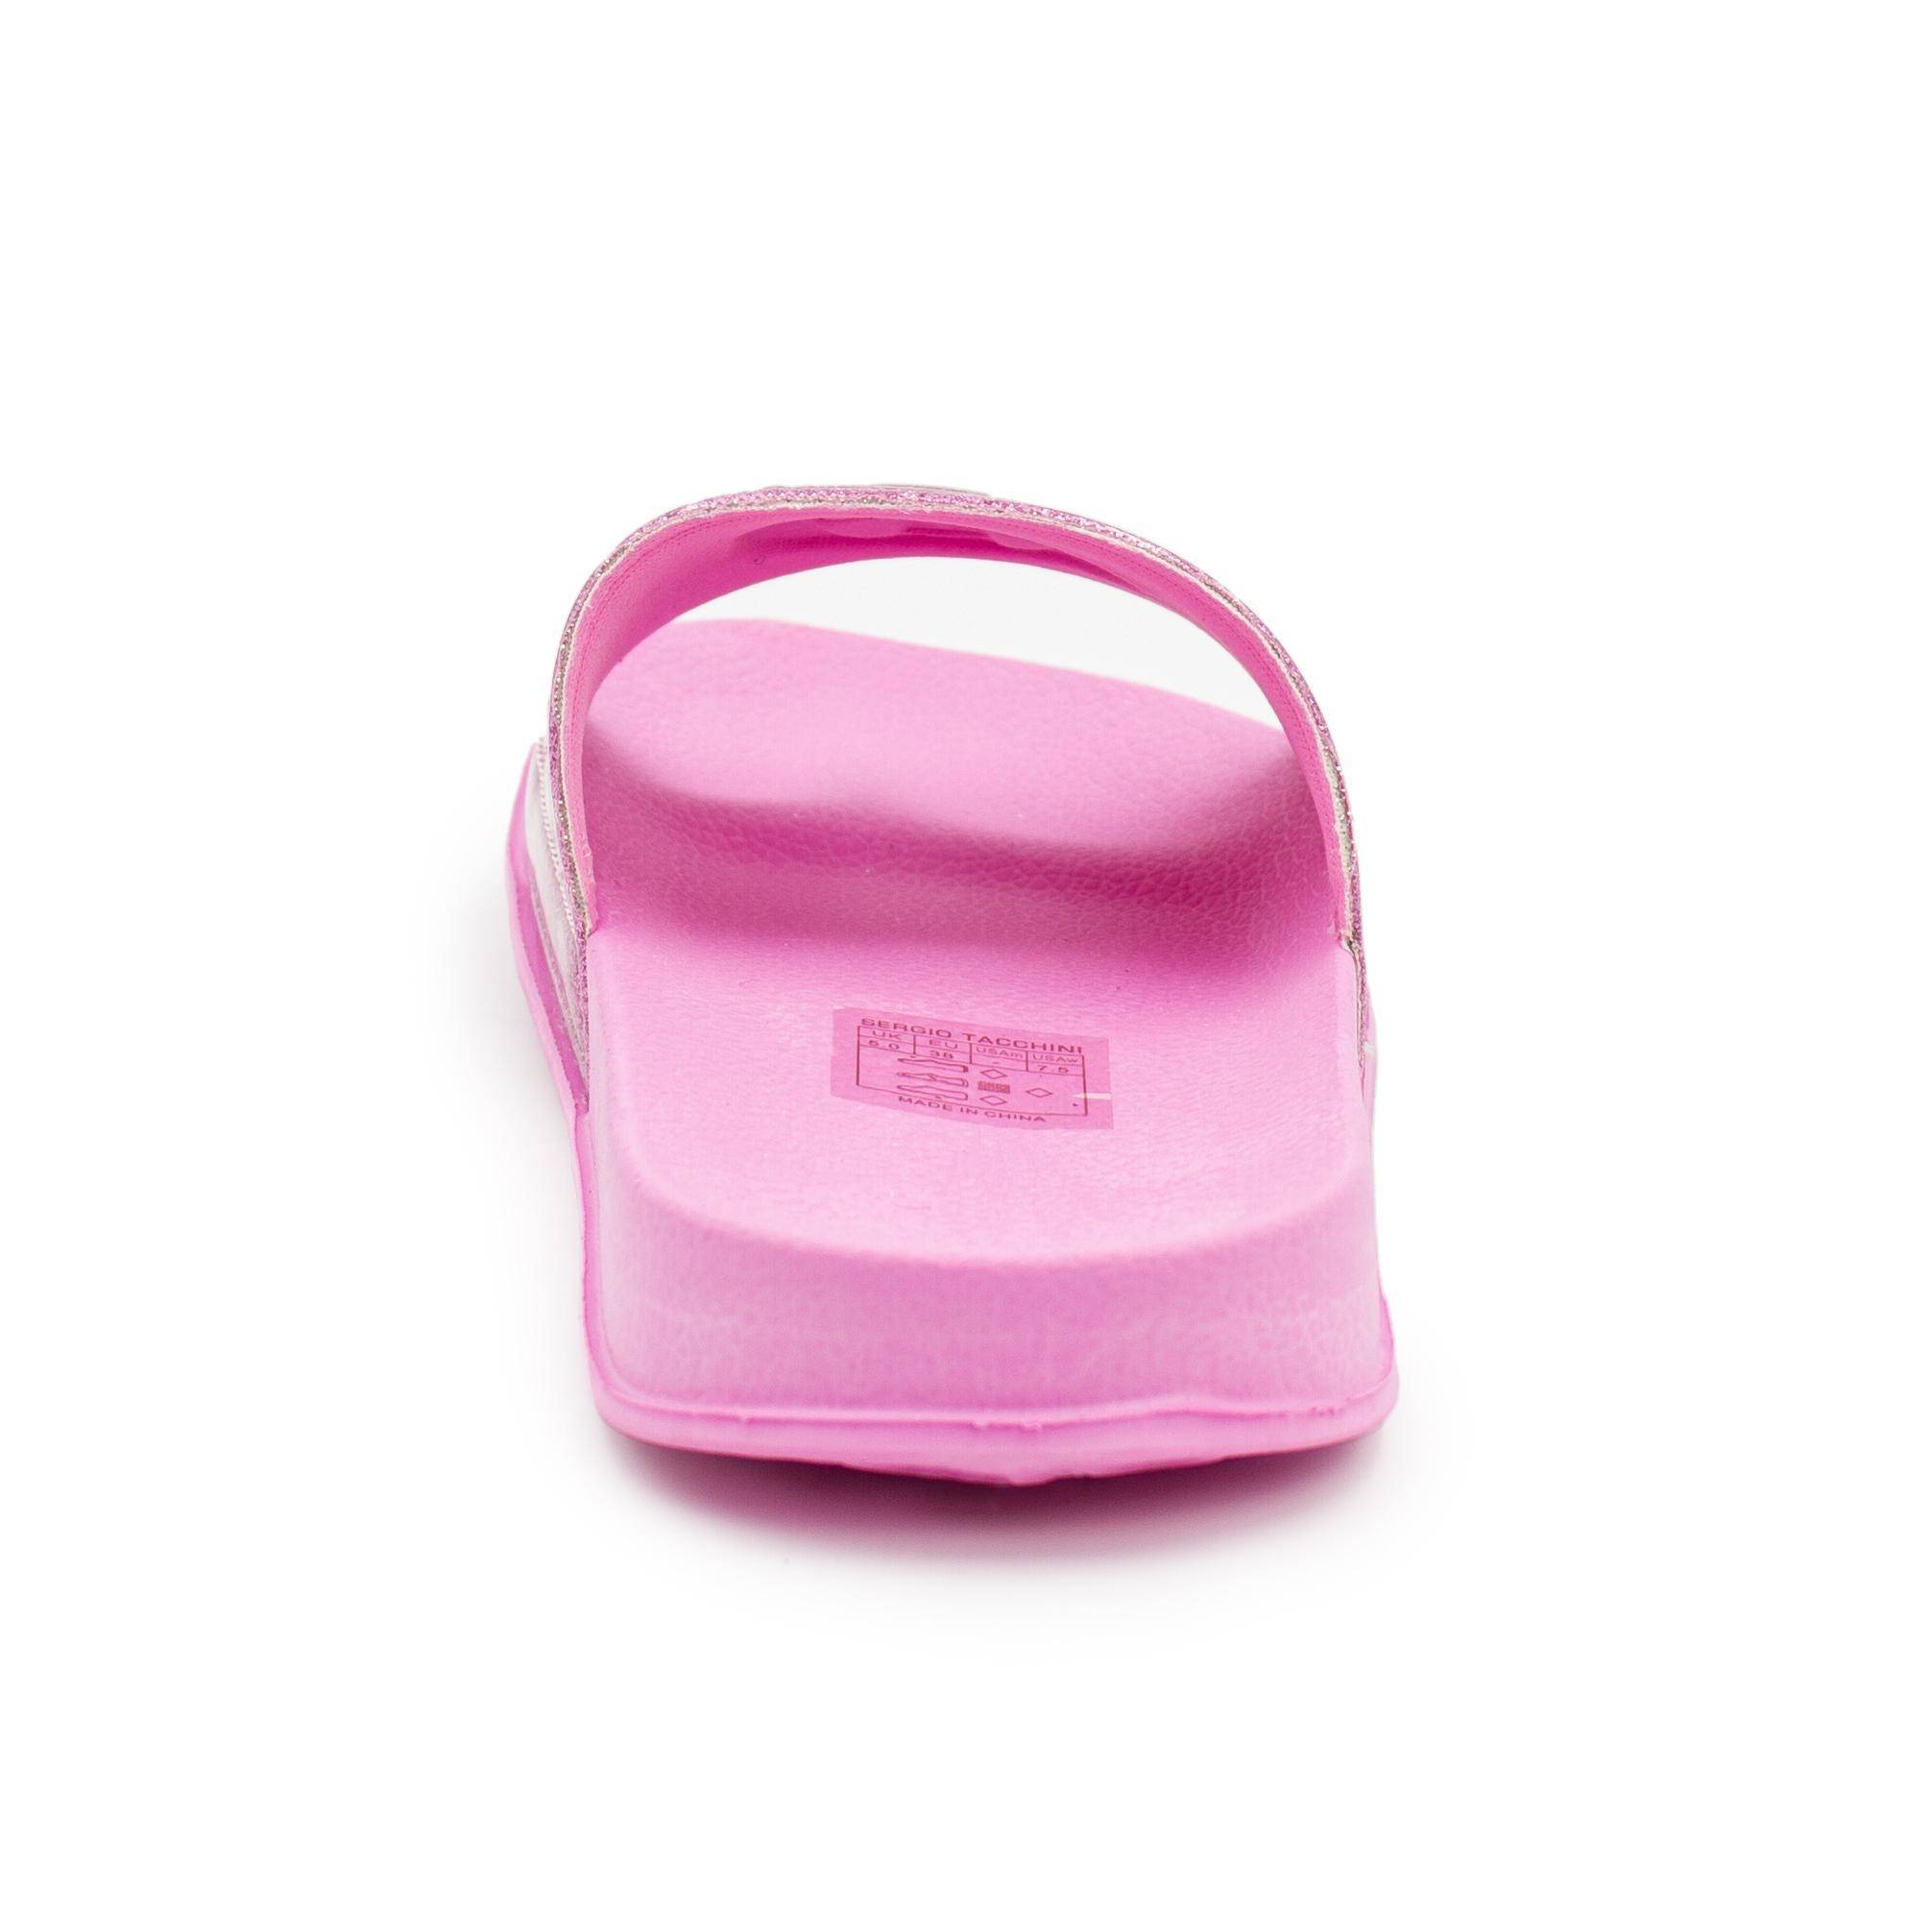 Женские сланцы Sergio Tacchini (REMIX GLITTER STW219006), розовые, цвет розовый, размер 41 - фото 4